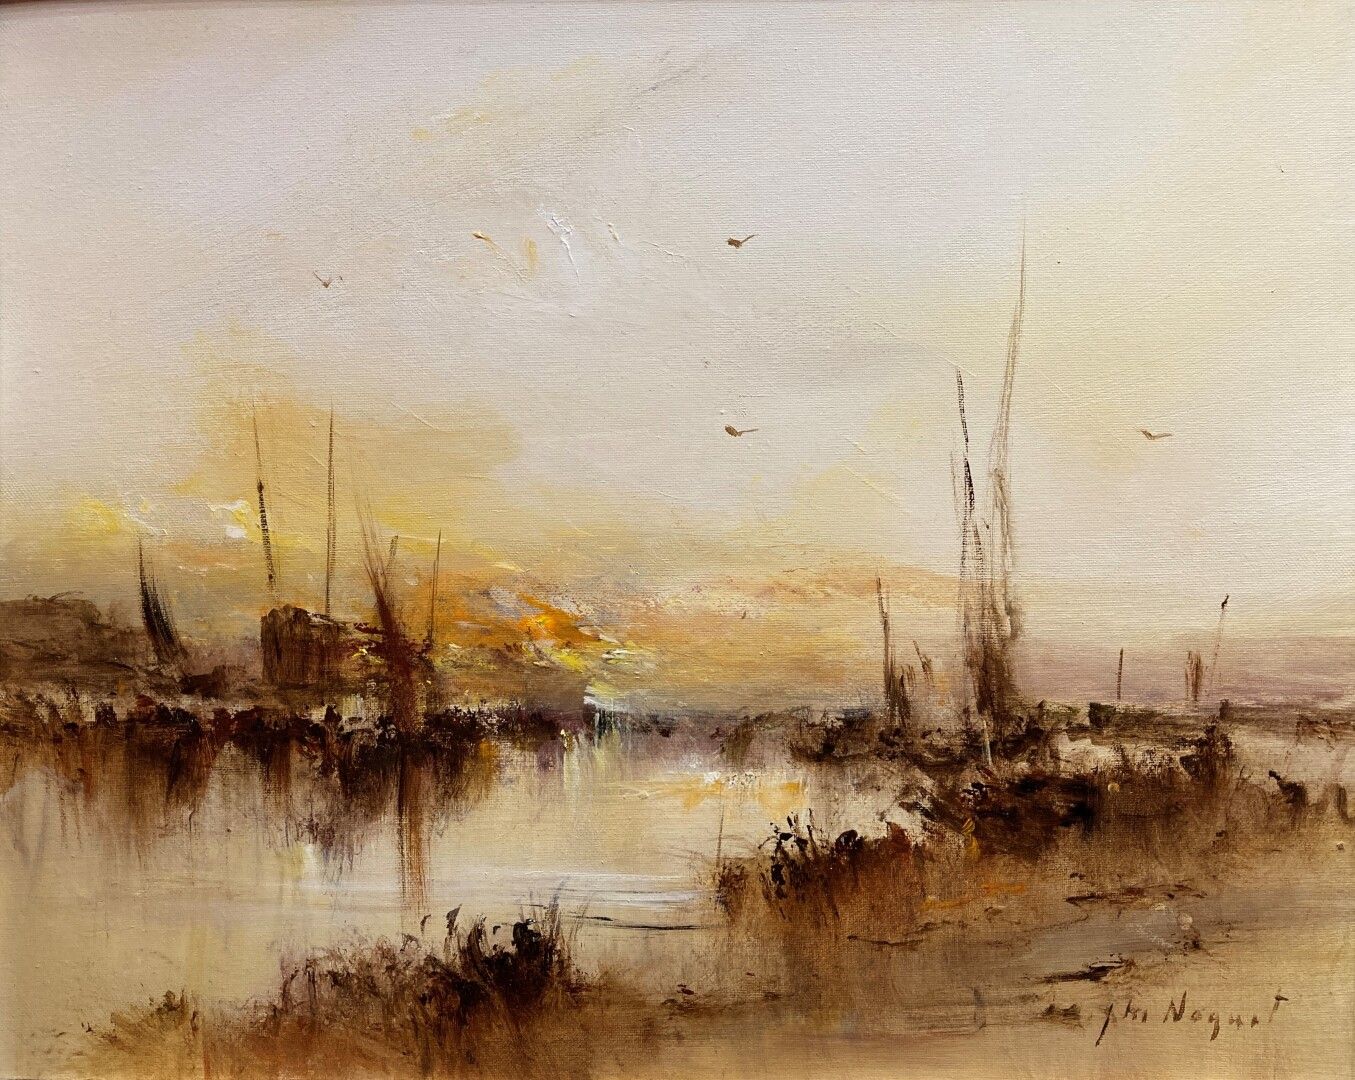 Null 让-米歇尔-诺凯（Jean-Michel NOQUET）(1950-2015)

湖泊景观

布面油画

36,5 x 44,5 cm